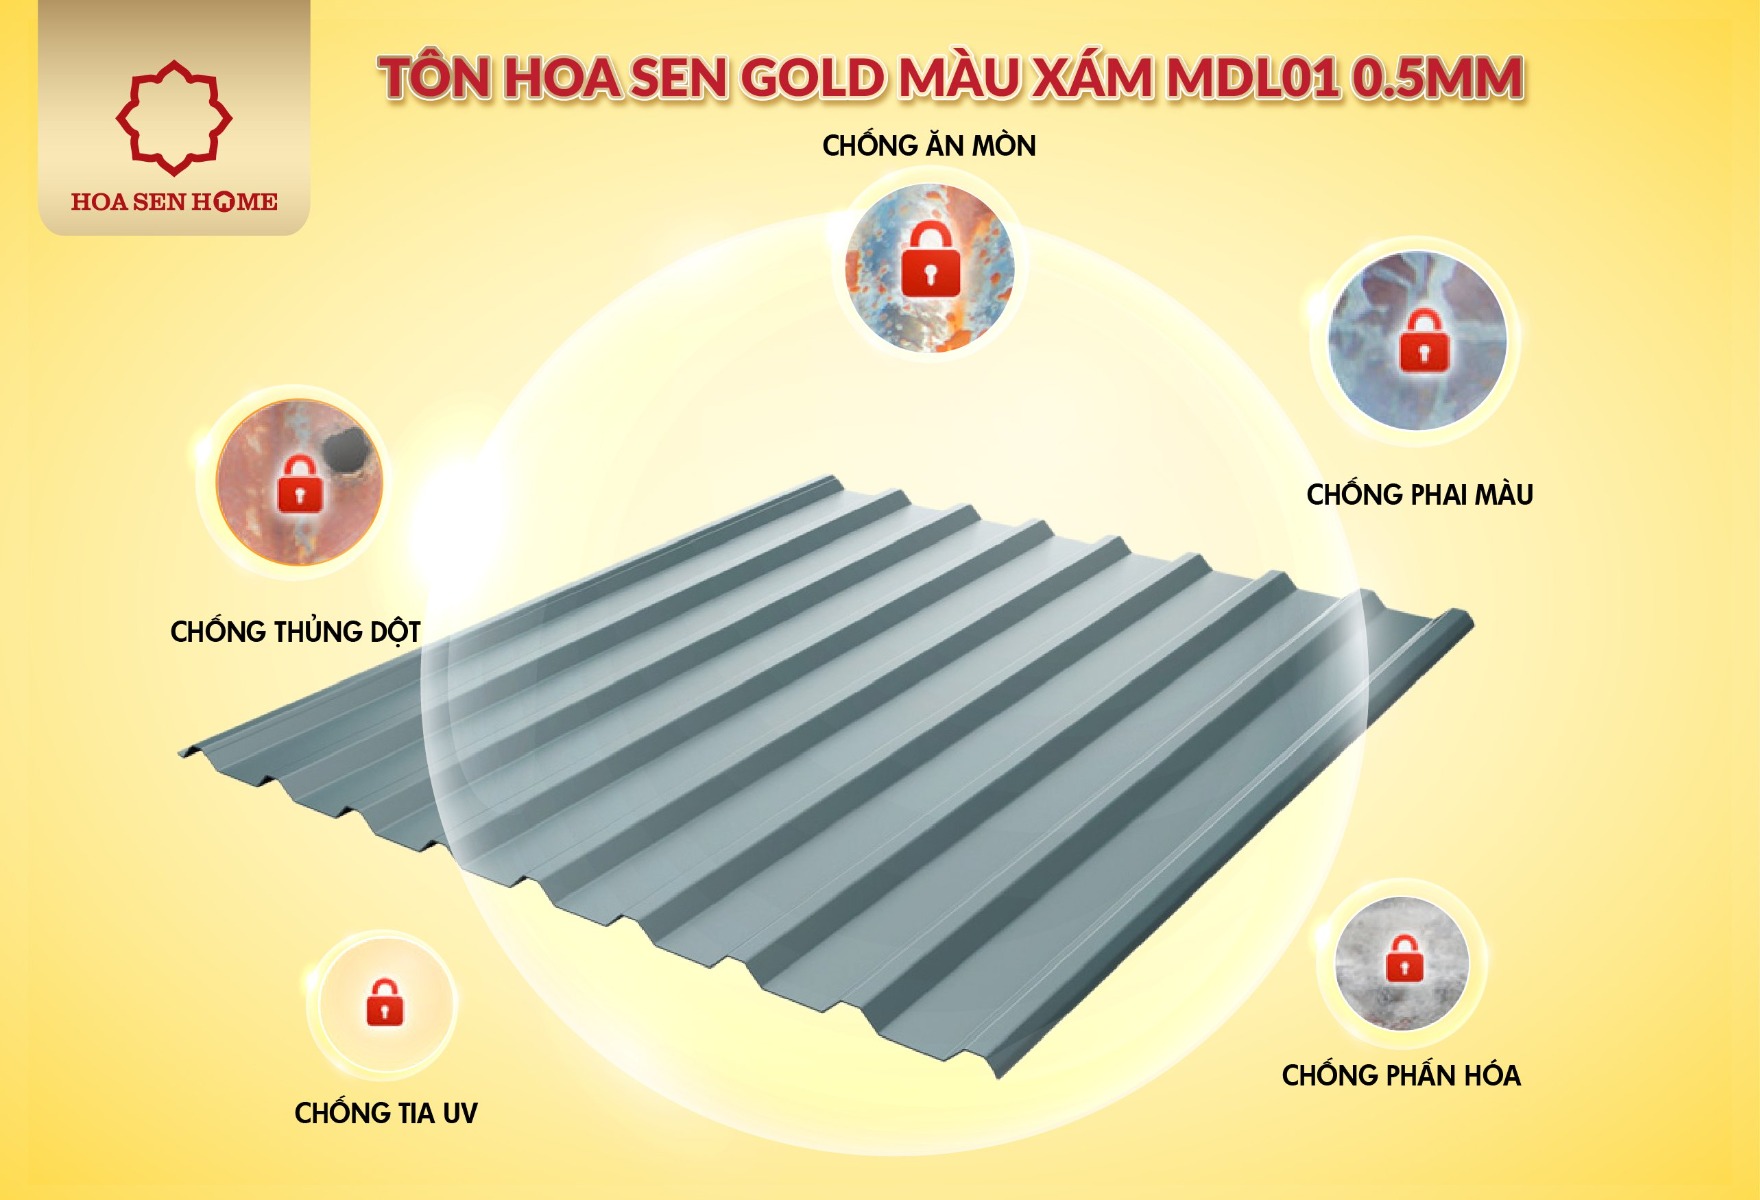 Tôn Hoa Sen Gold màu xám MDL01 0.5mm